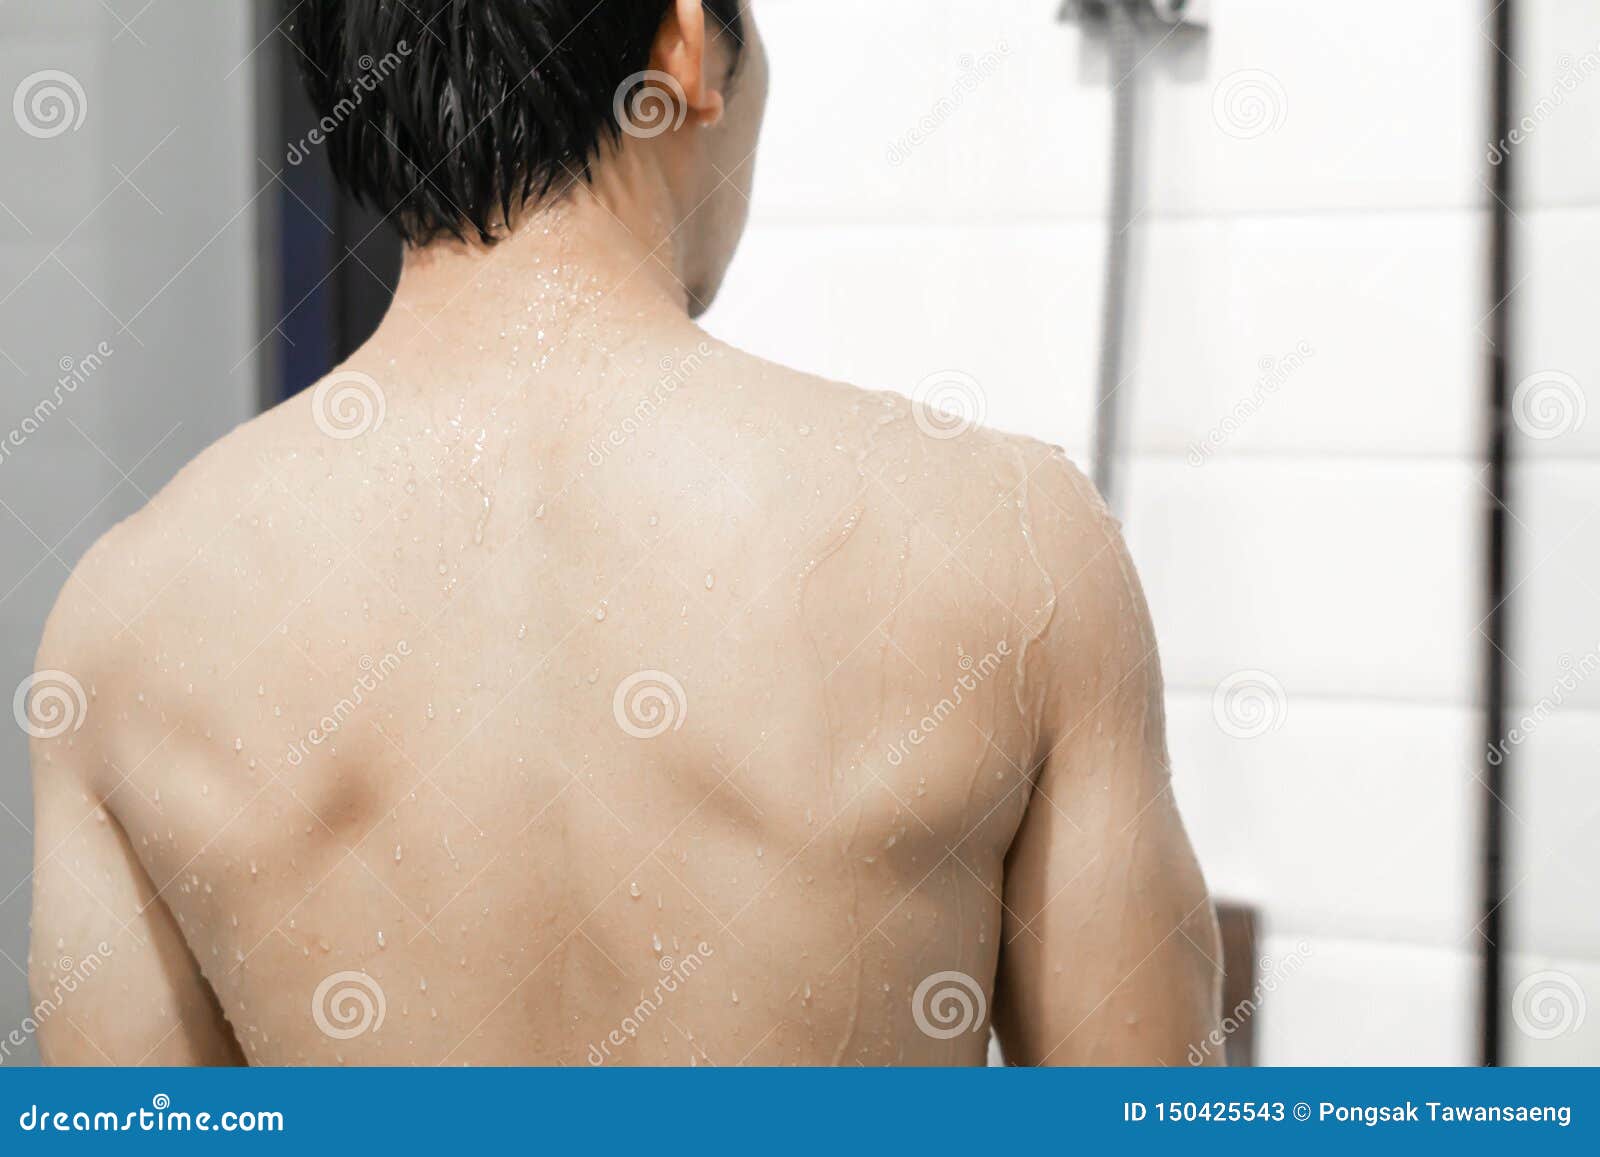 Asian Athletes Showering